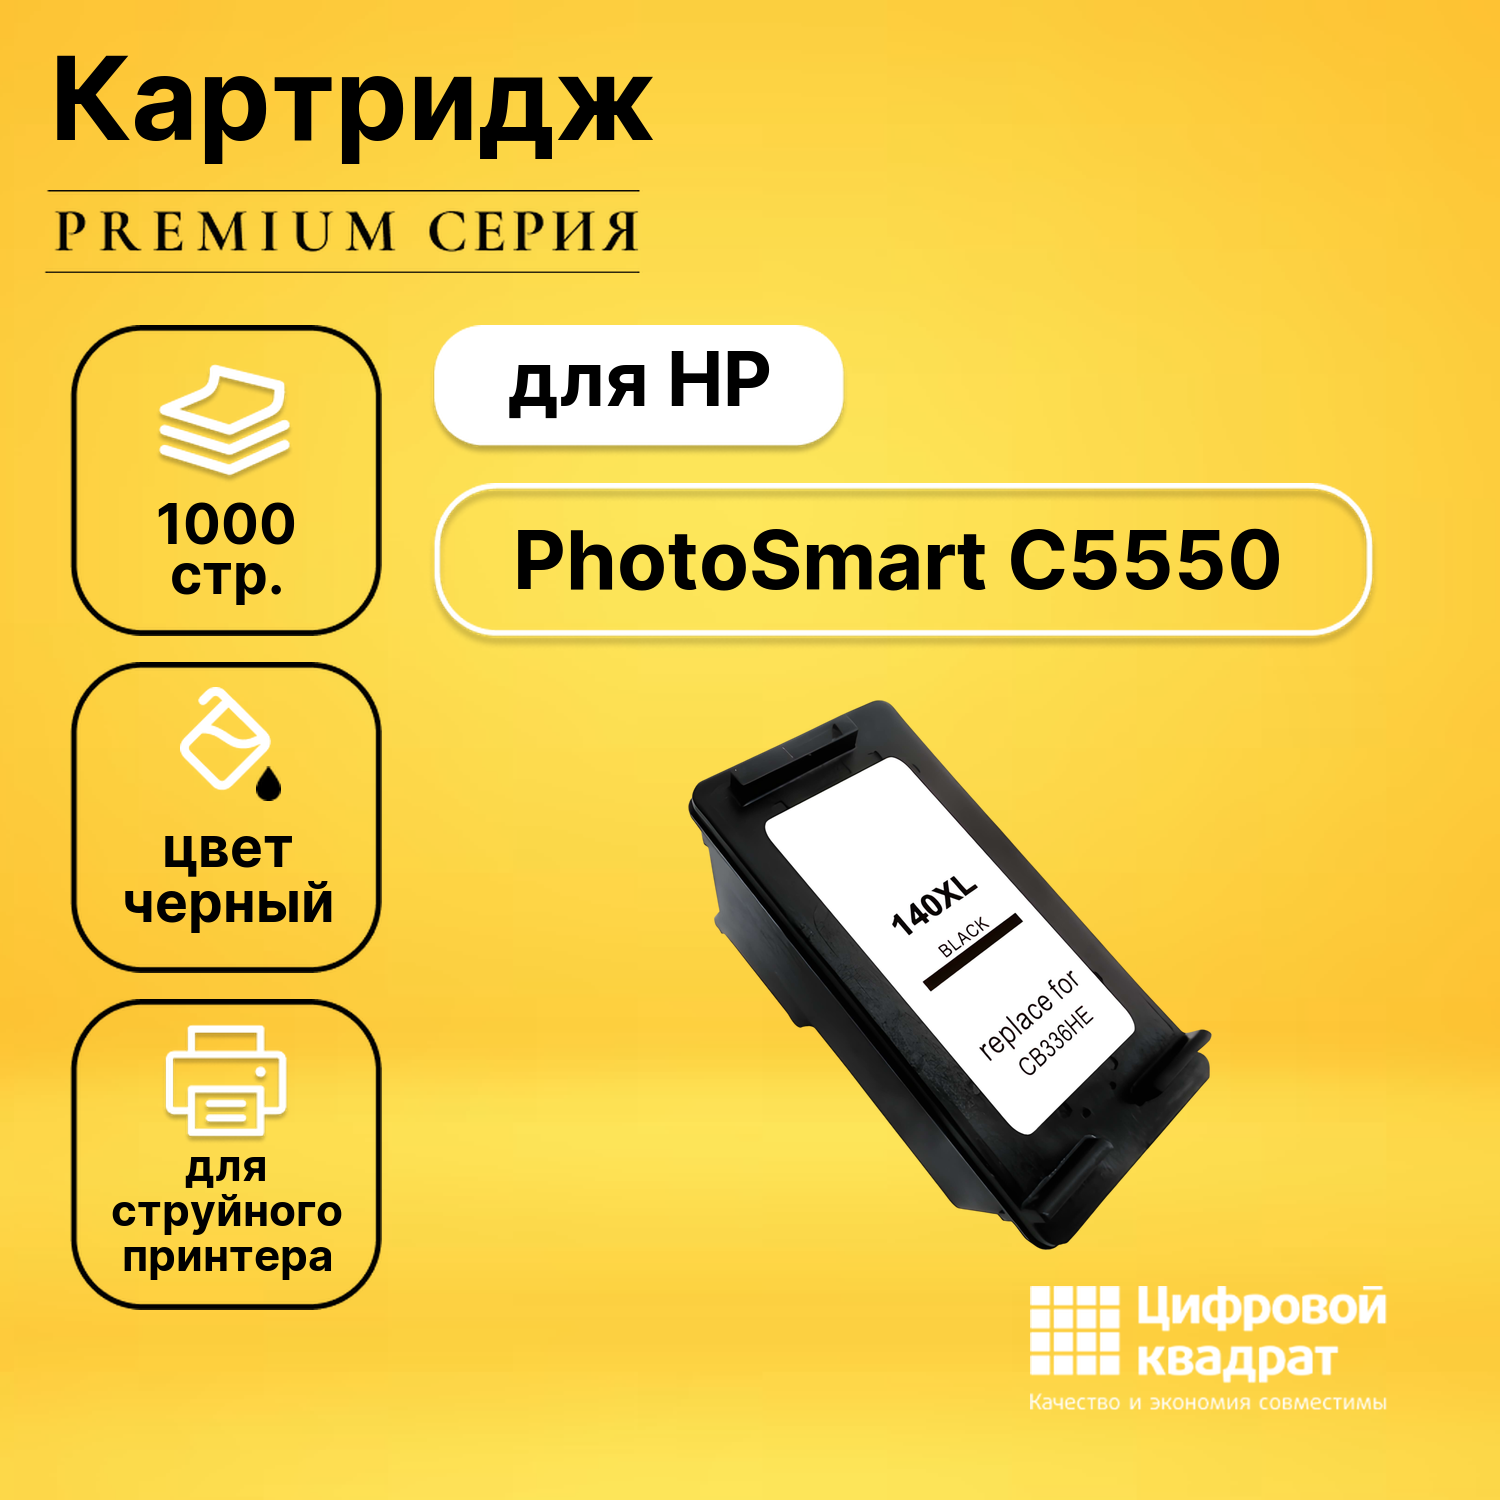 Картридж DS для HP PhotoSmart C5550 совместимый